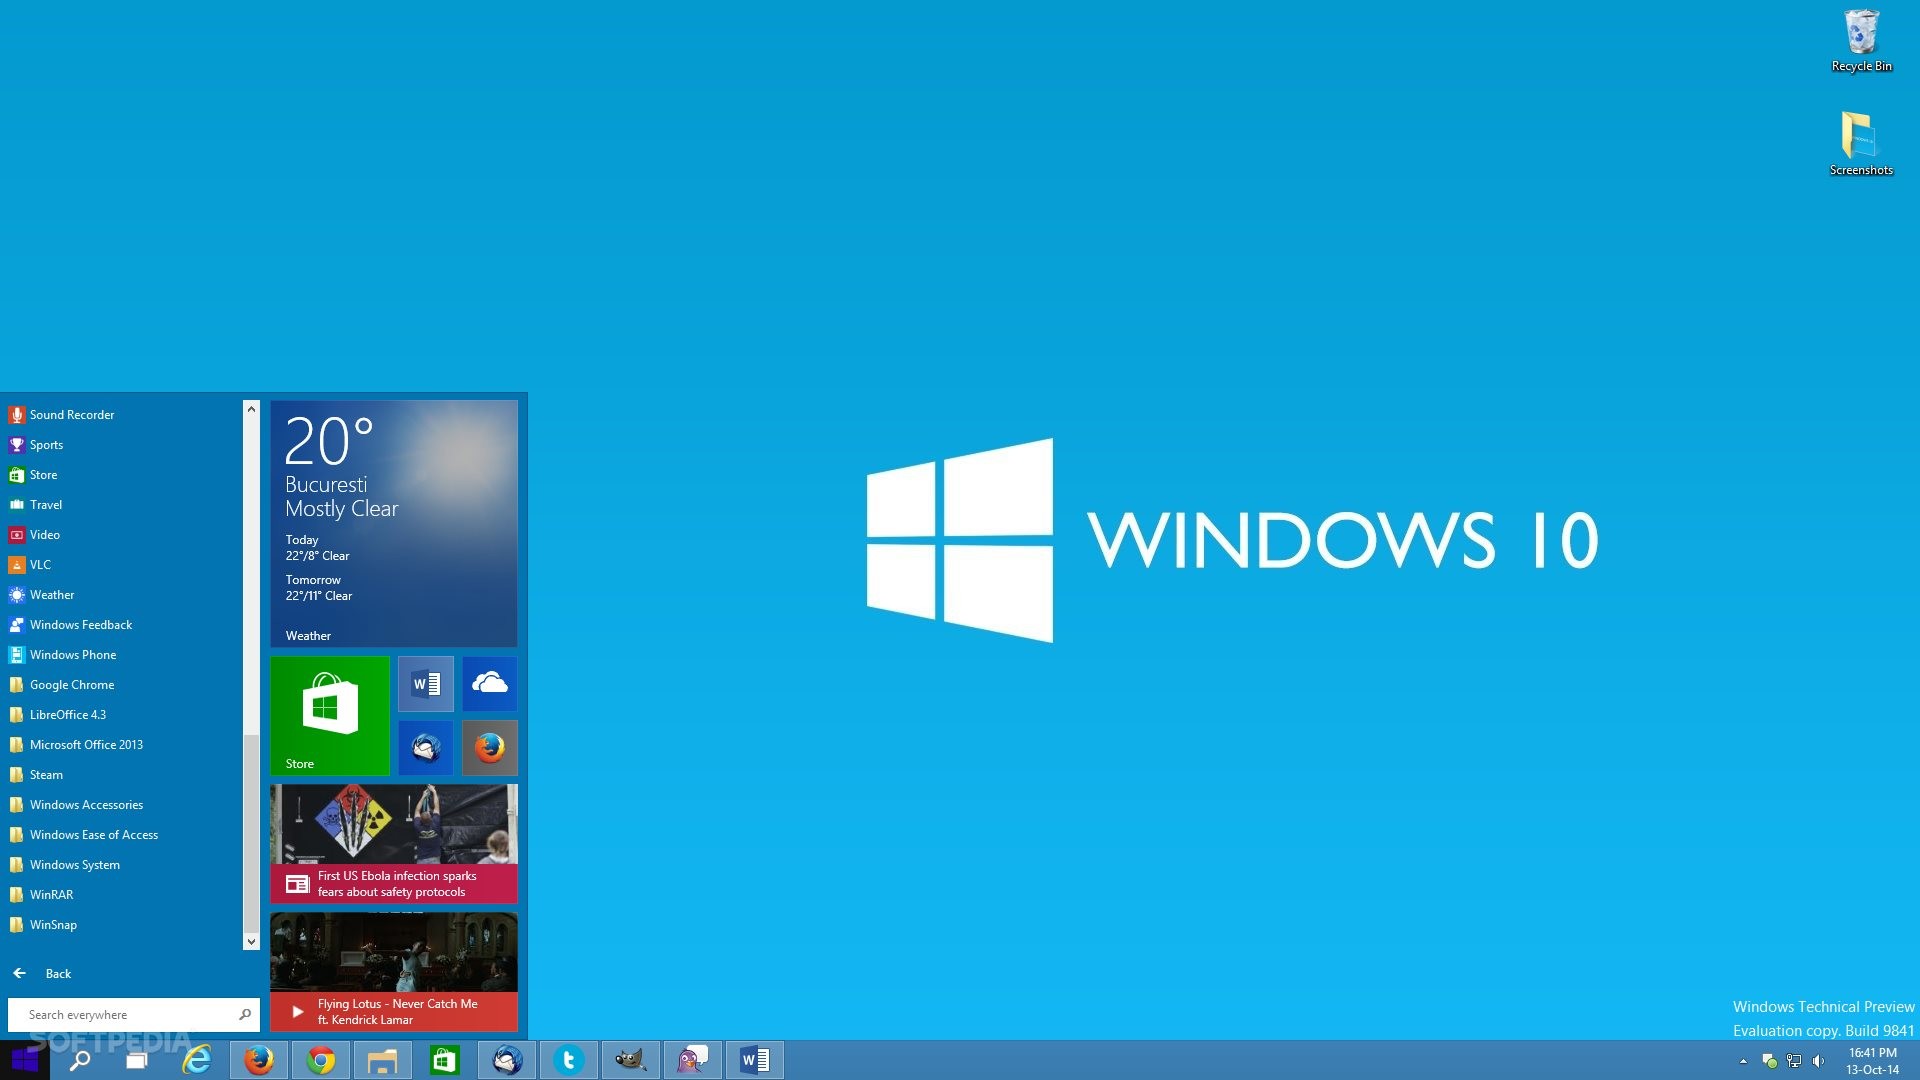 Cool Windows 10 Wallpaper